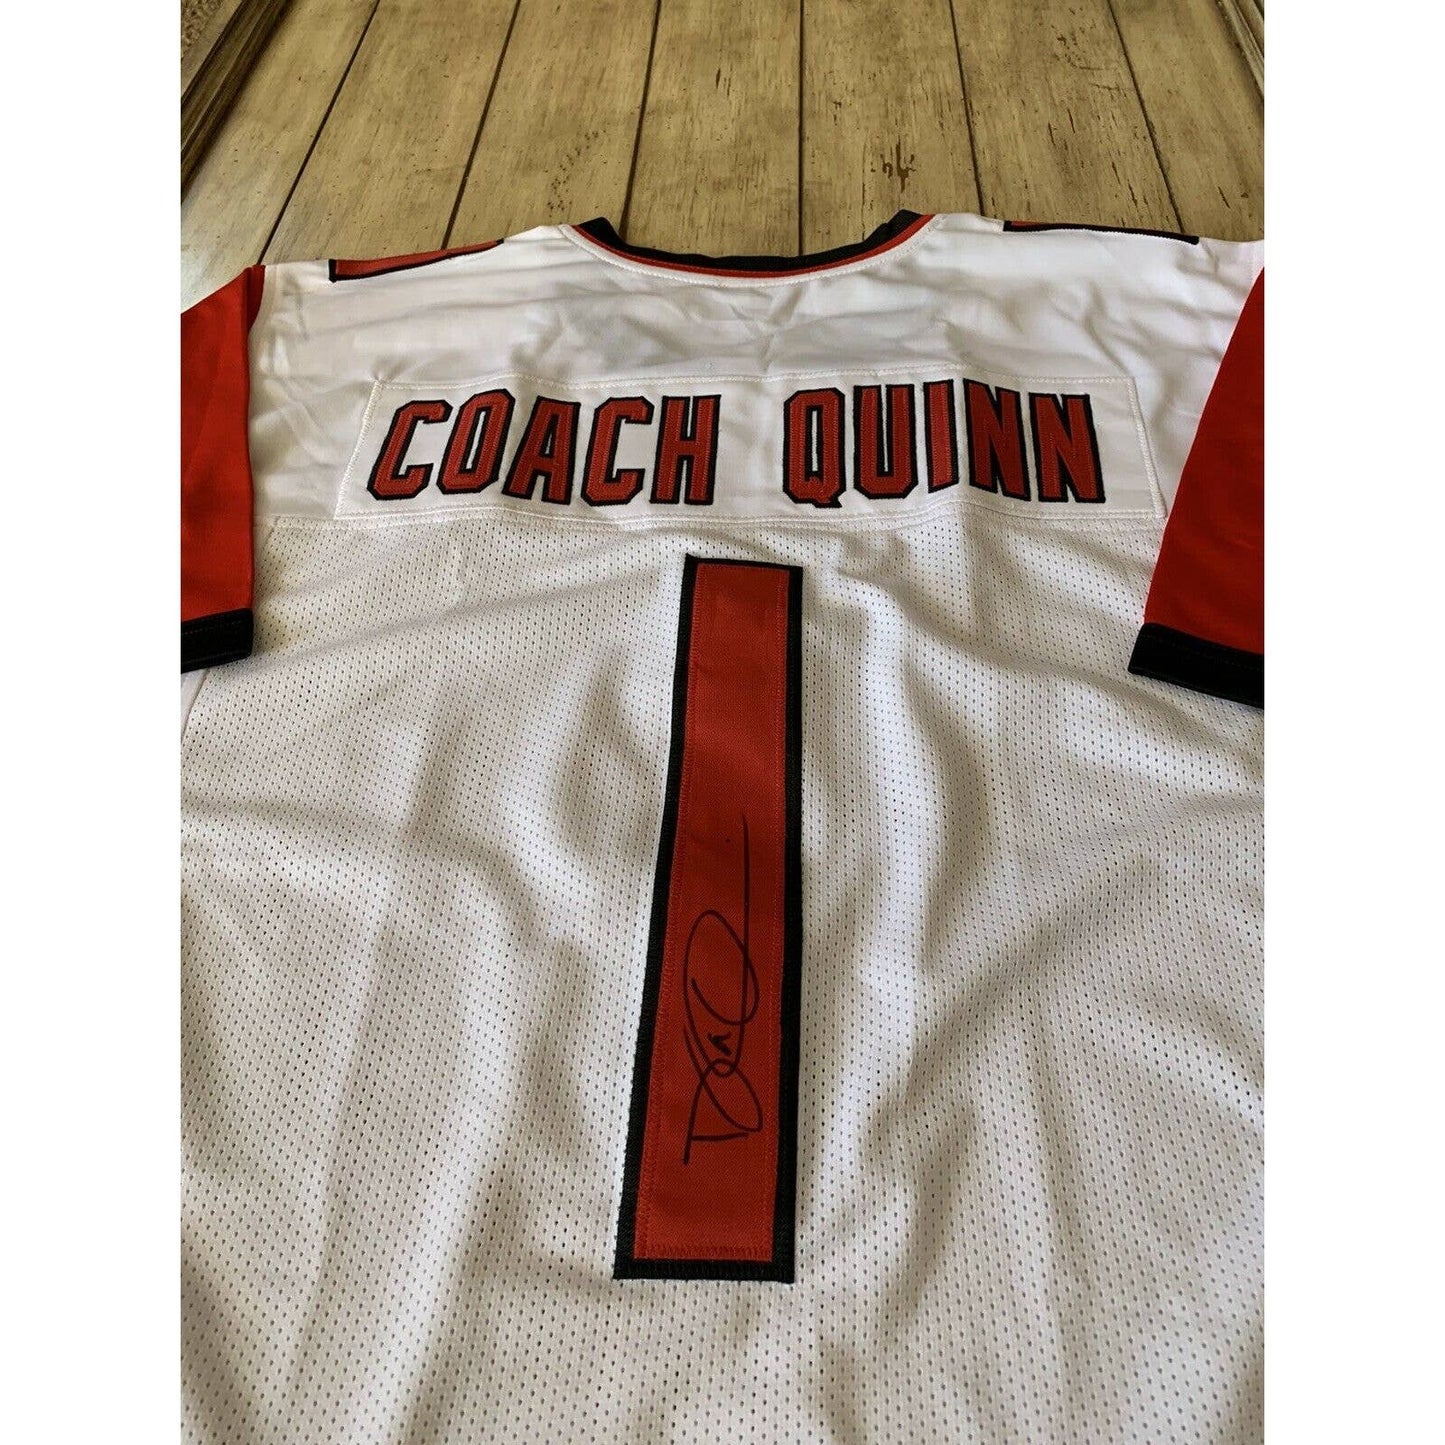 Dan Quinn Autographed/Signed Jersey Atlanta Falcons Coach - TreasuresEvolved